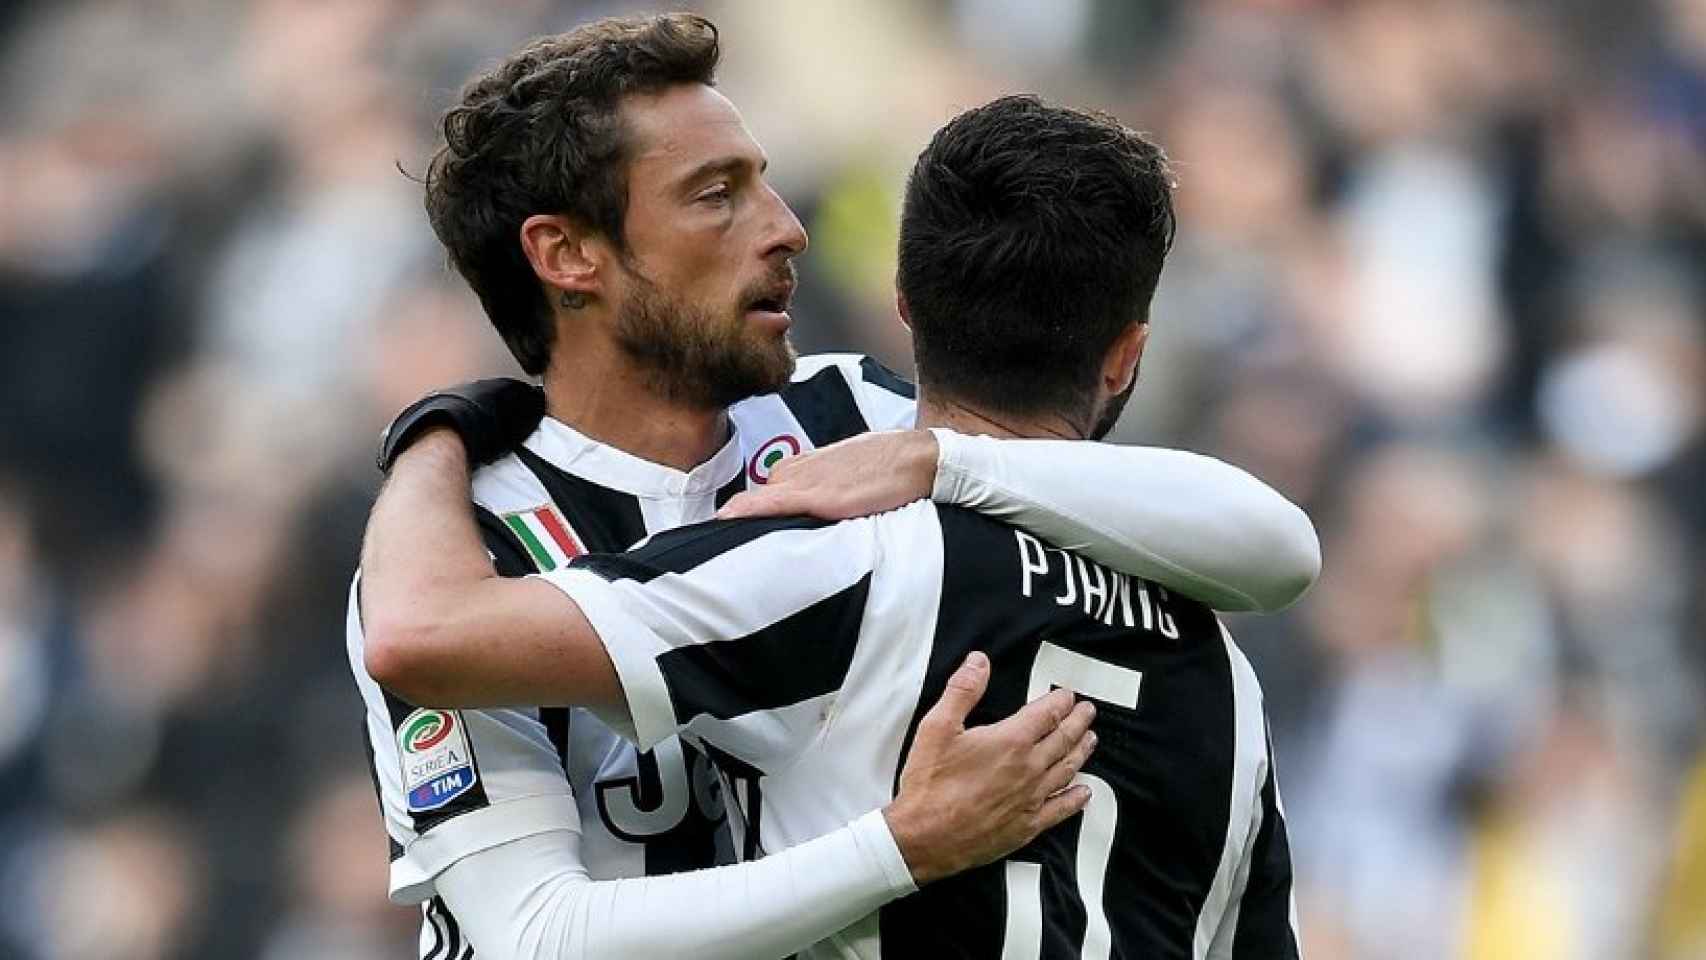 Pjanic celebra un gol junto a Marchisio. Foto: juventus.com